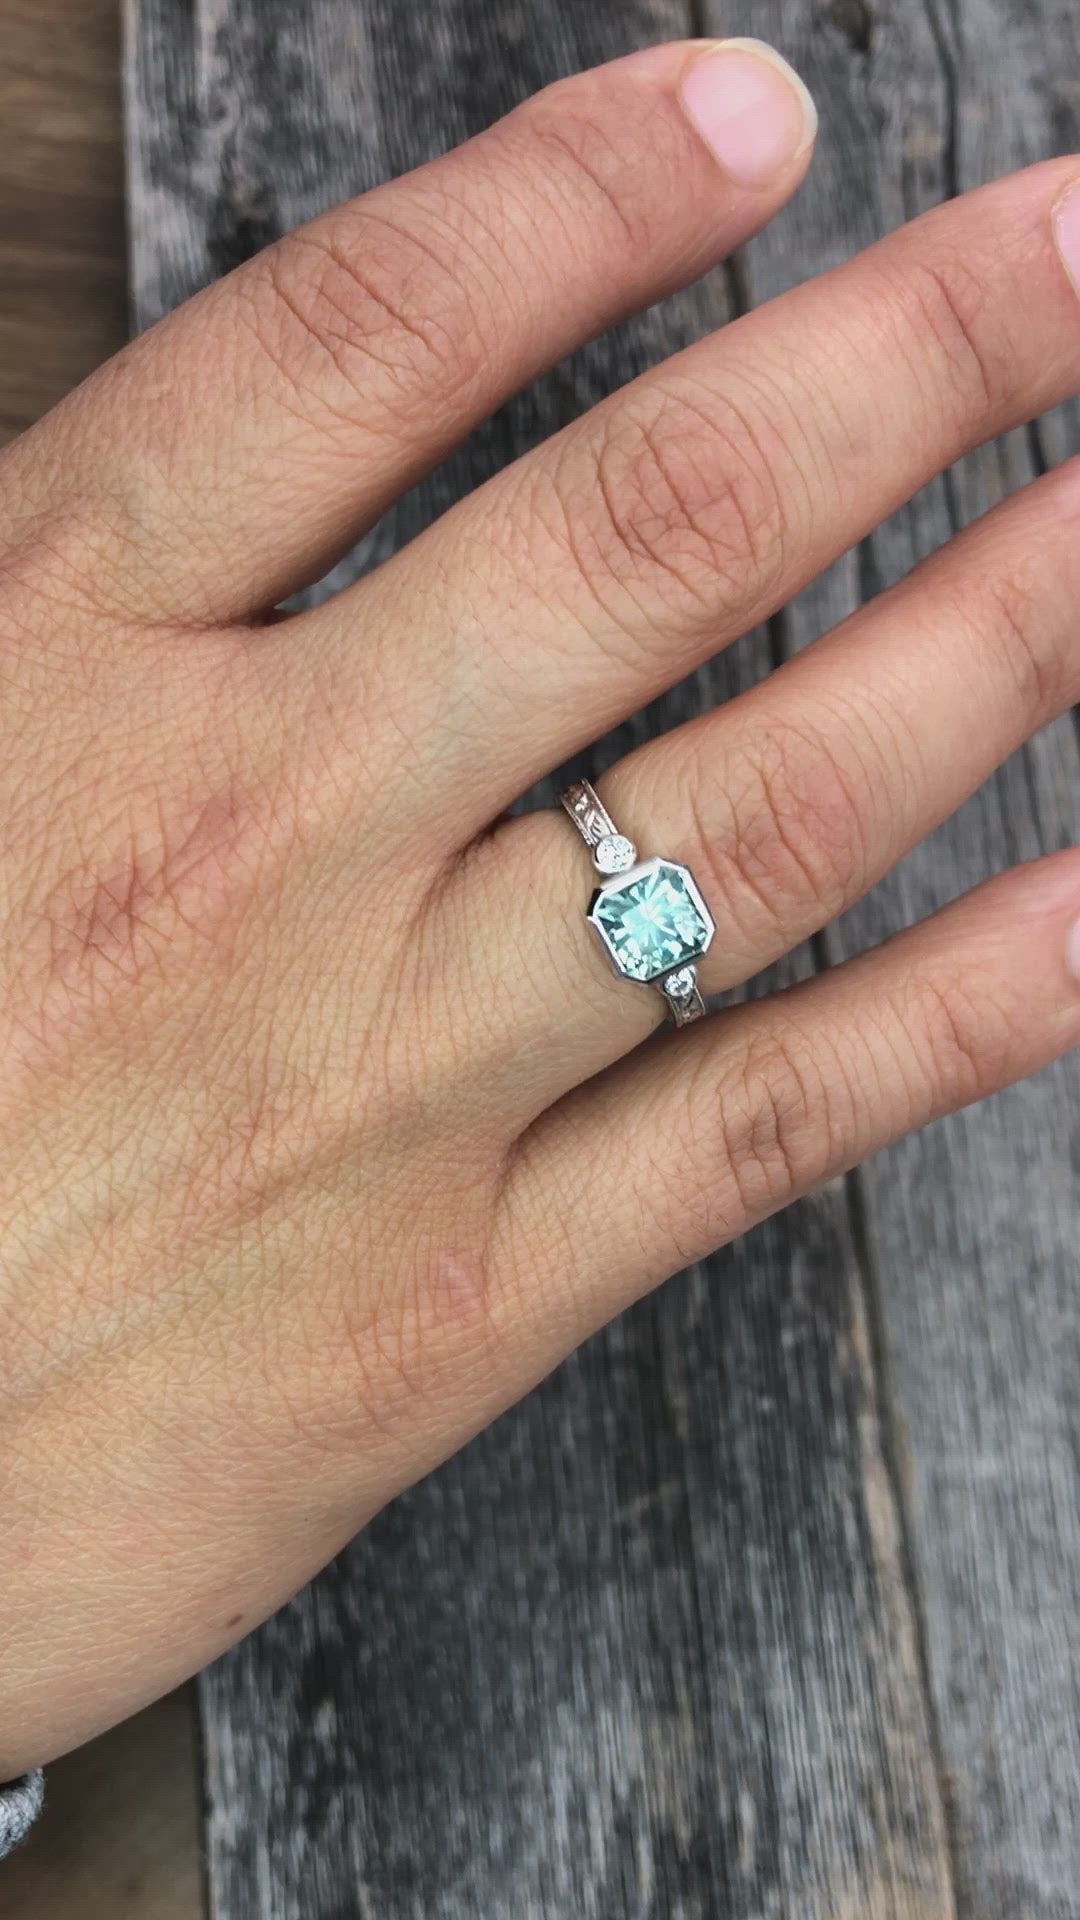 Buy Natural Sapphire Rings (Men & Women) Online | GemsNY